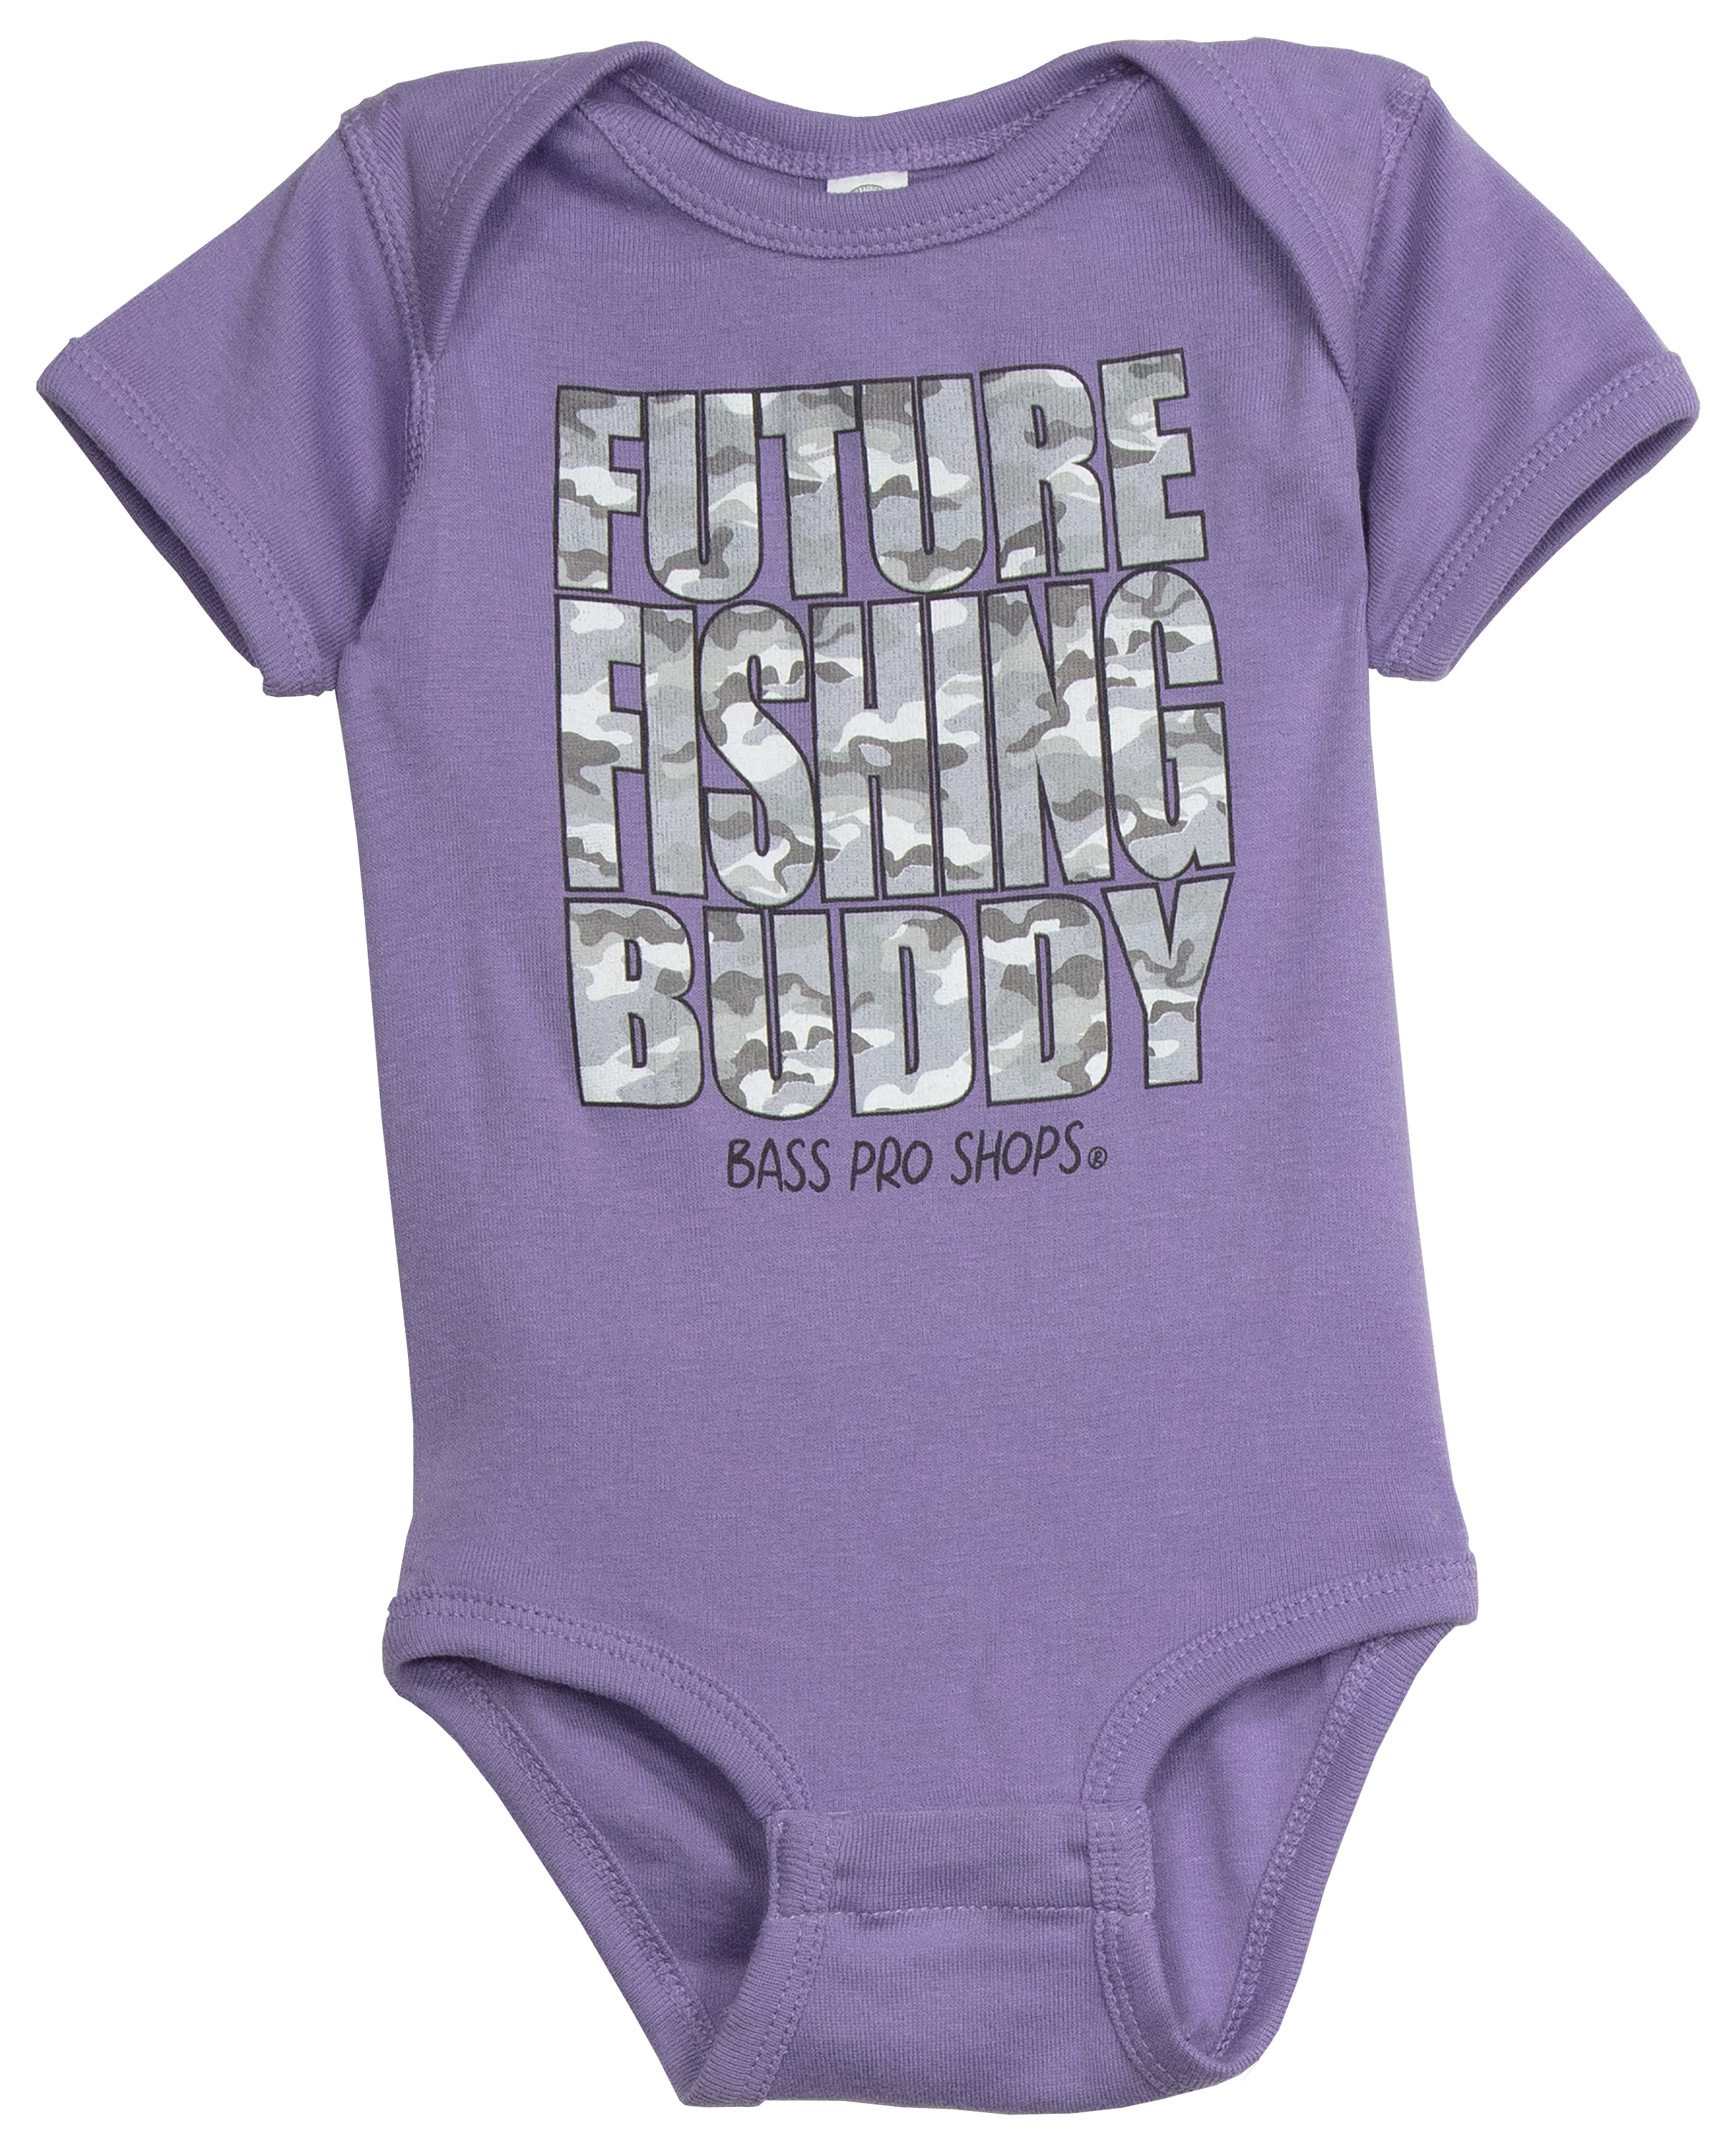 Creeper Future Fishing Buddy Baby Bodysuit Funny Outdoor Sport Shirt  Heather Grey - 